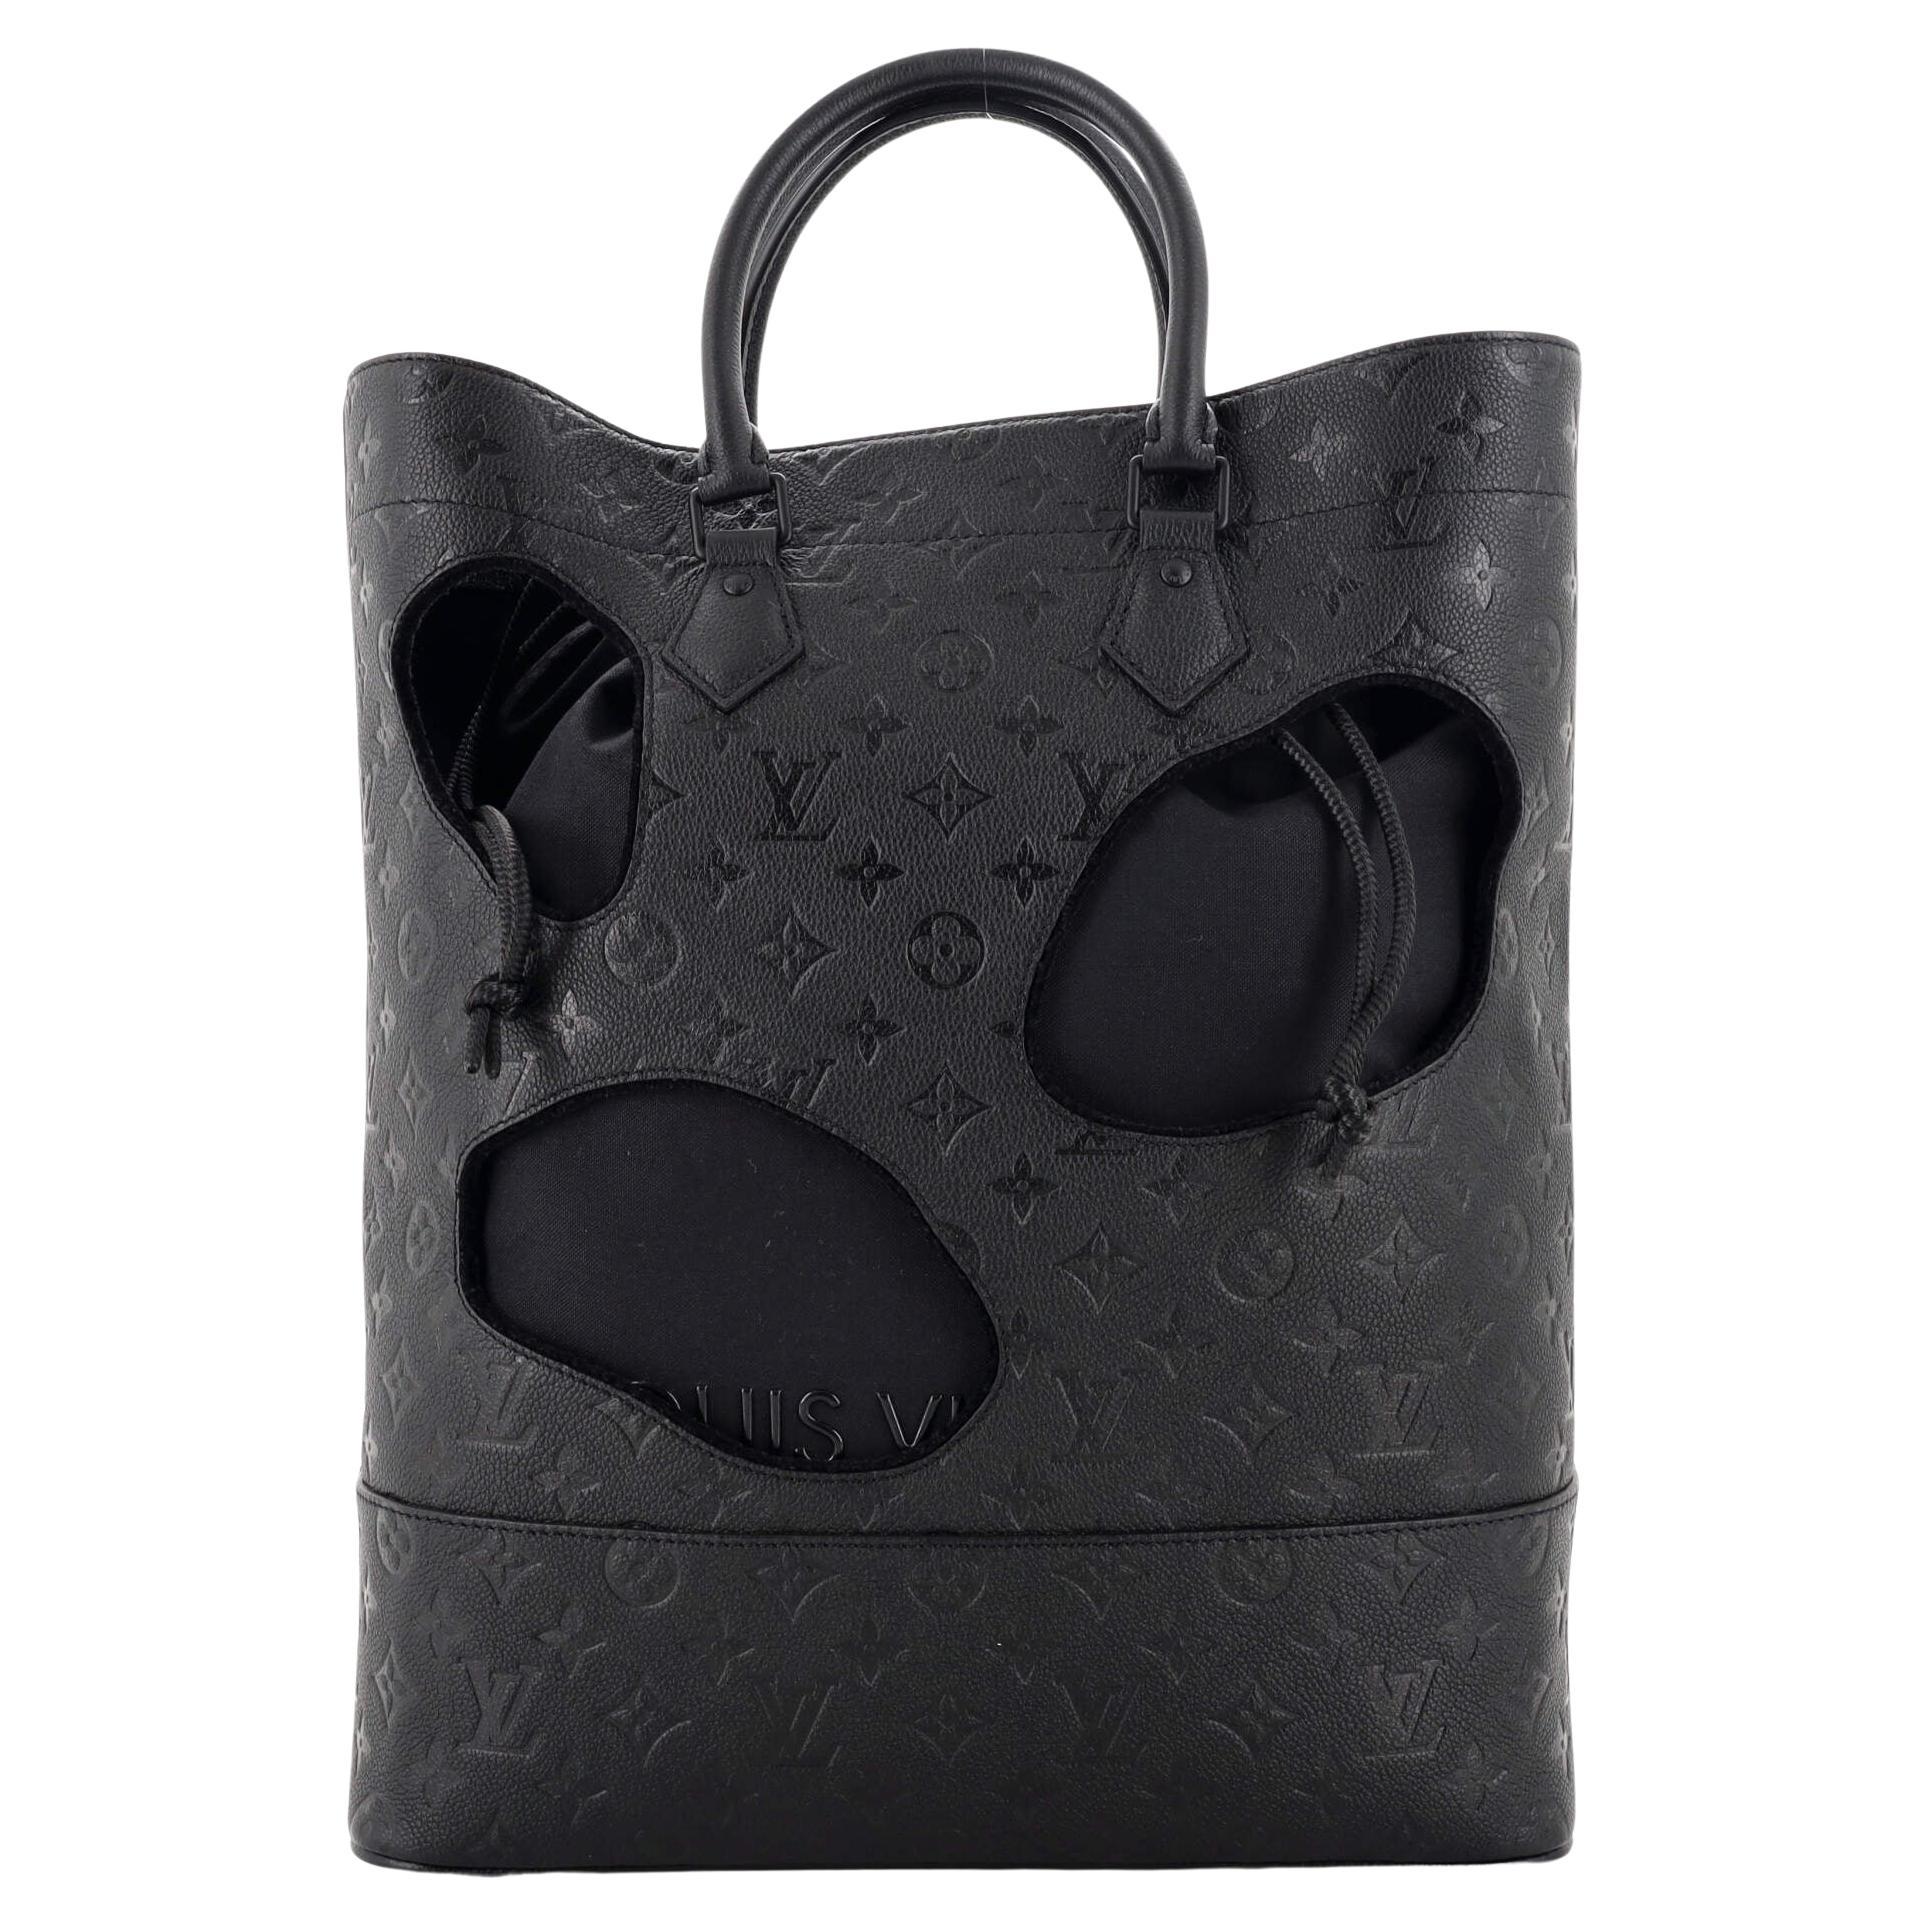 louis vuitton purse with holes